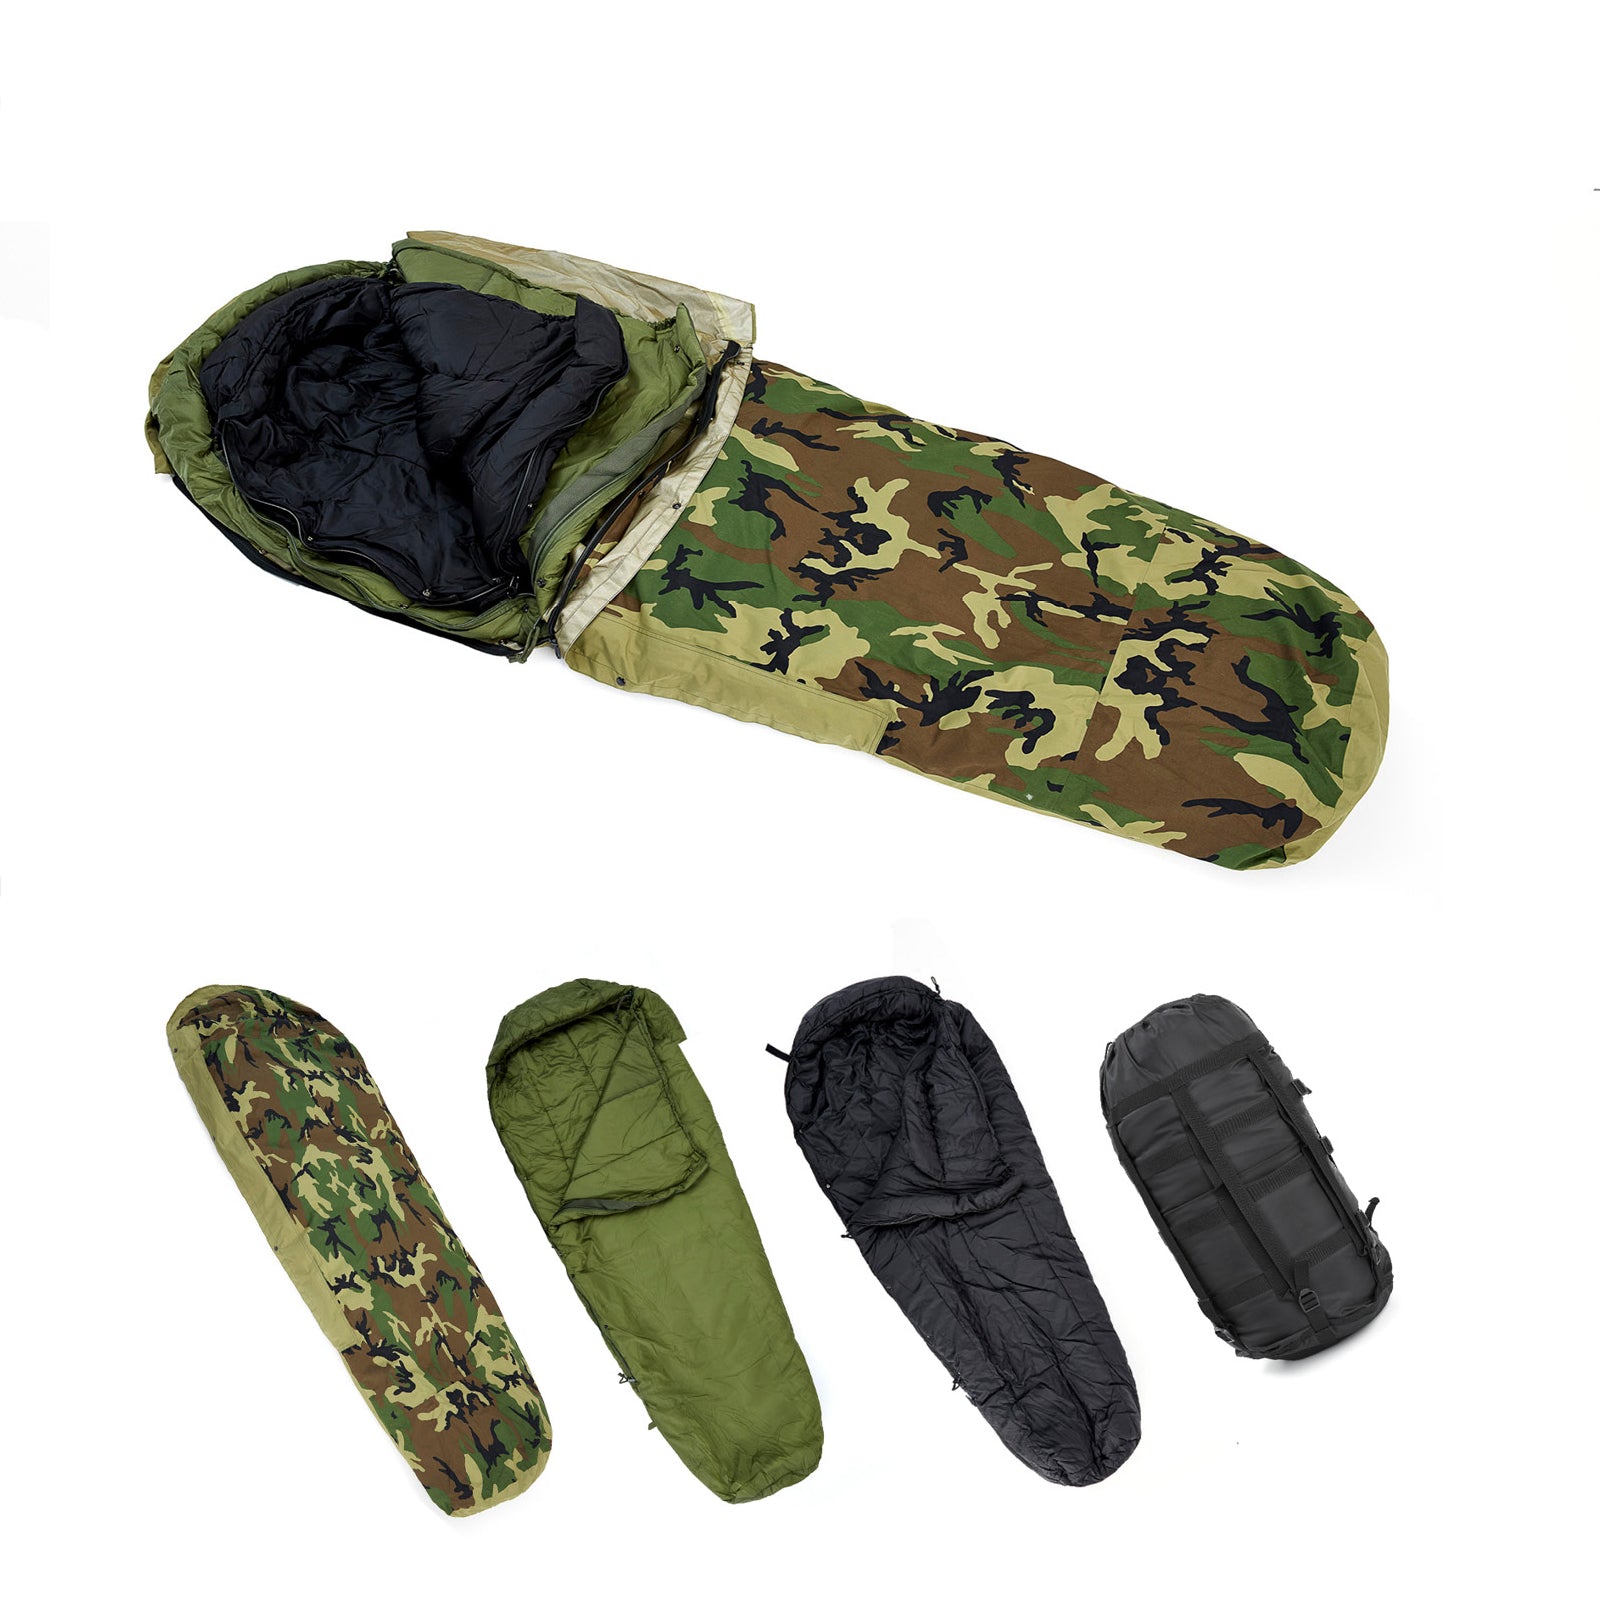 Akmax Military Waterproof All-Season Multifunctional Modular Sleeping Bag with Bivy Cover Woodland - AKmax Military